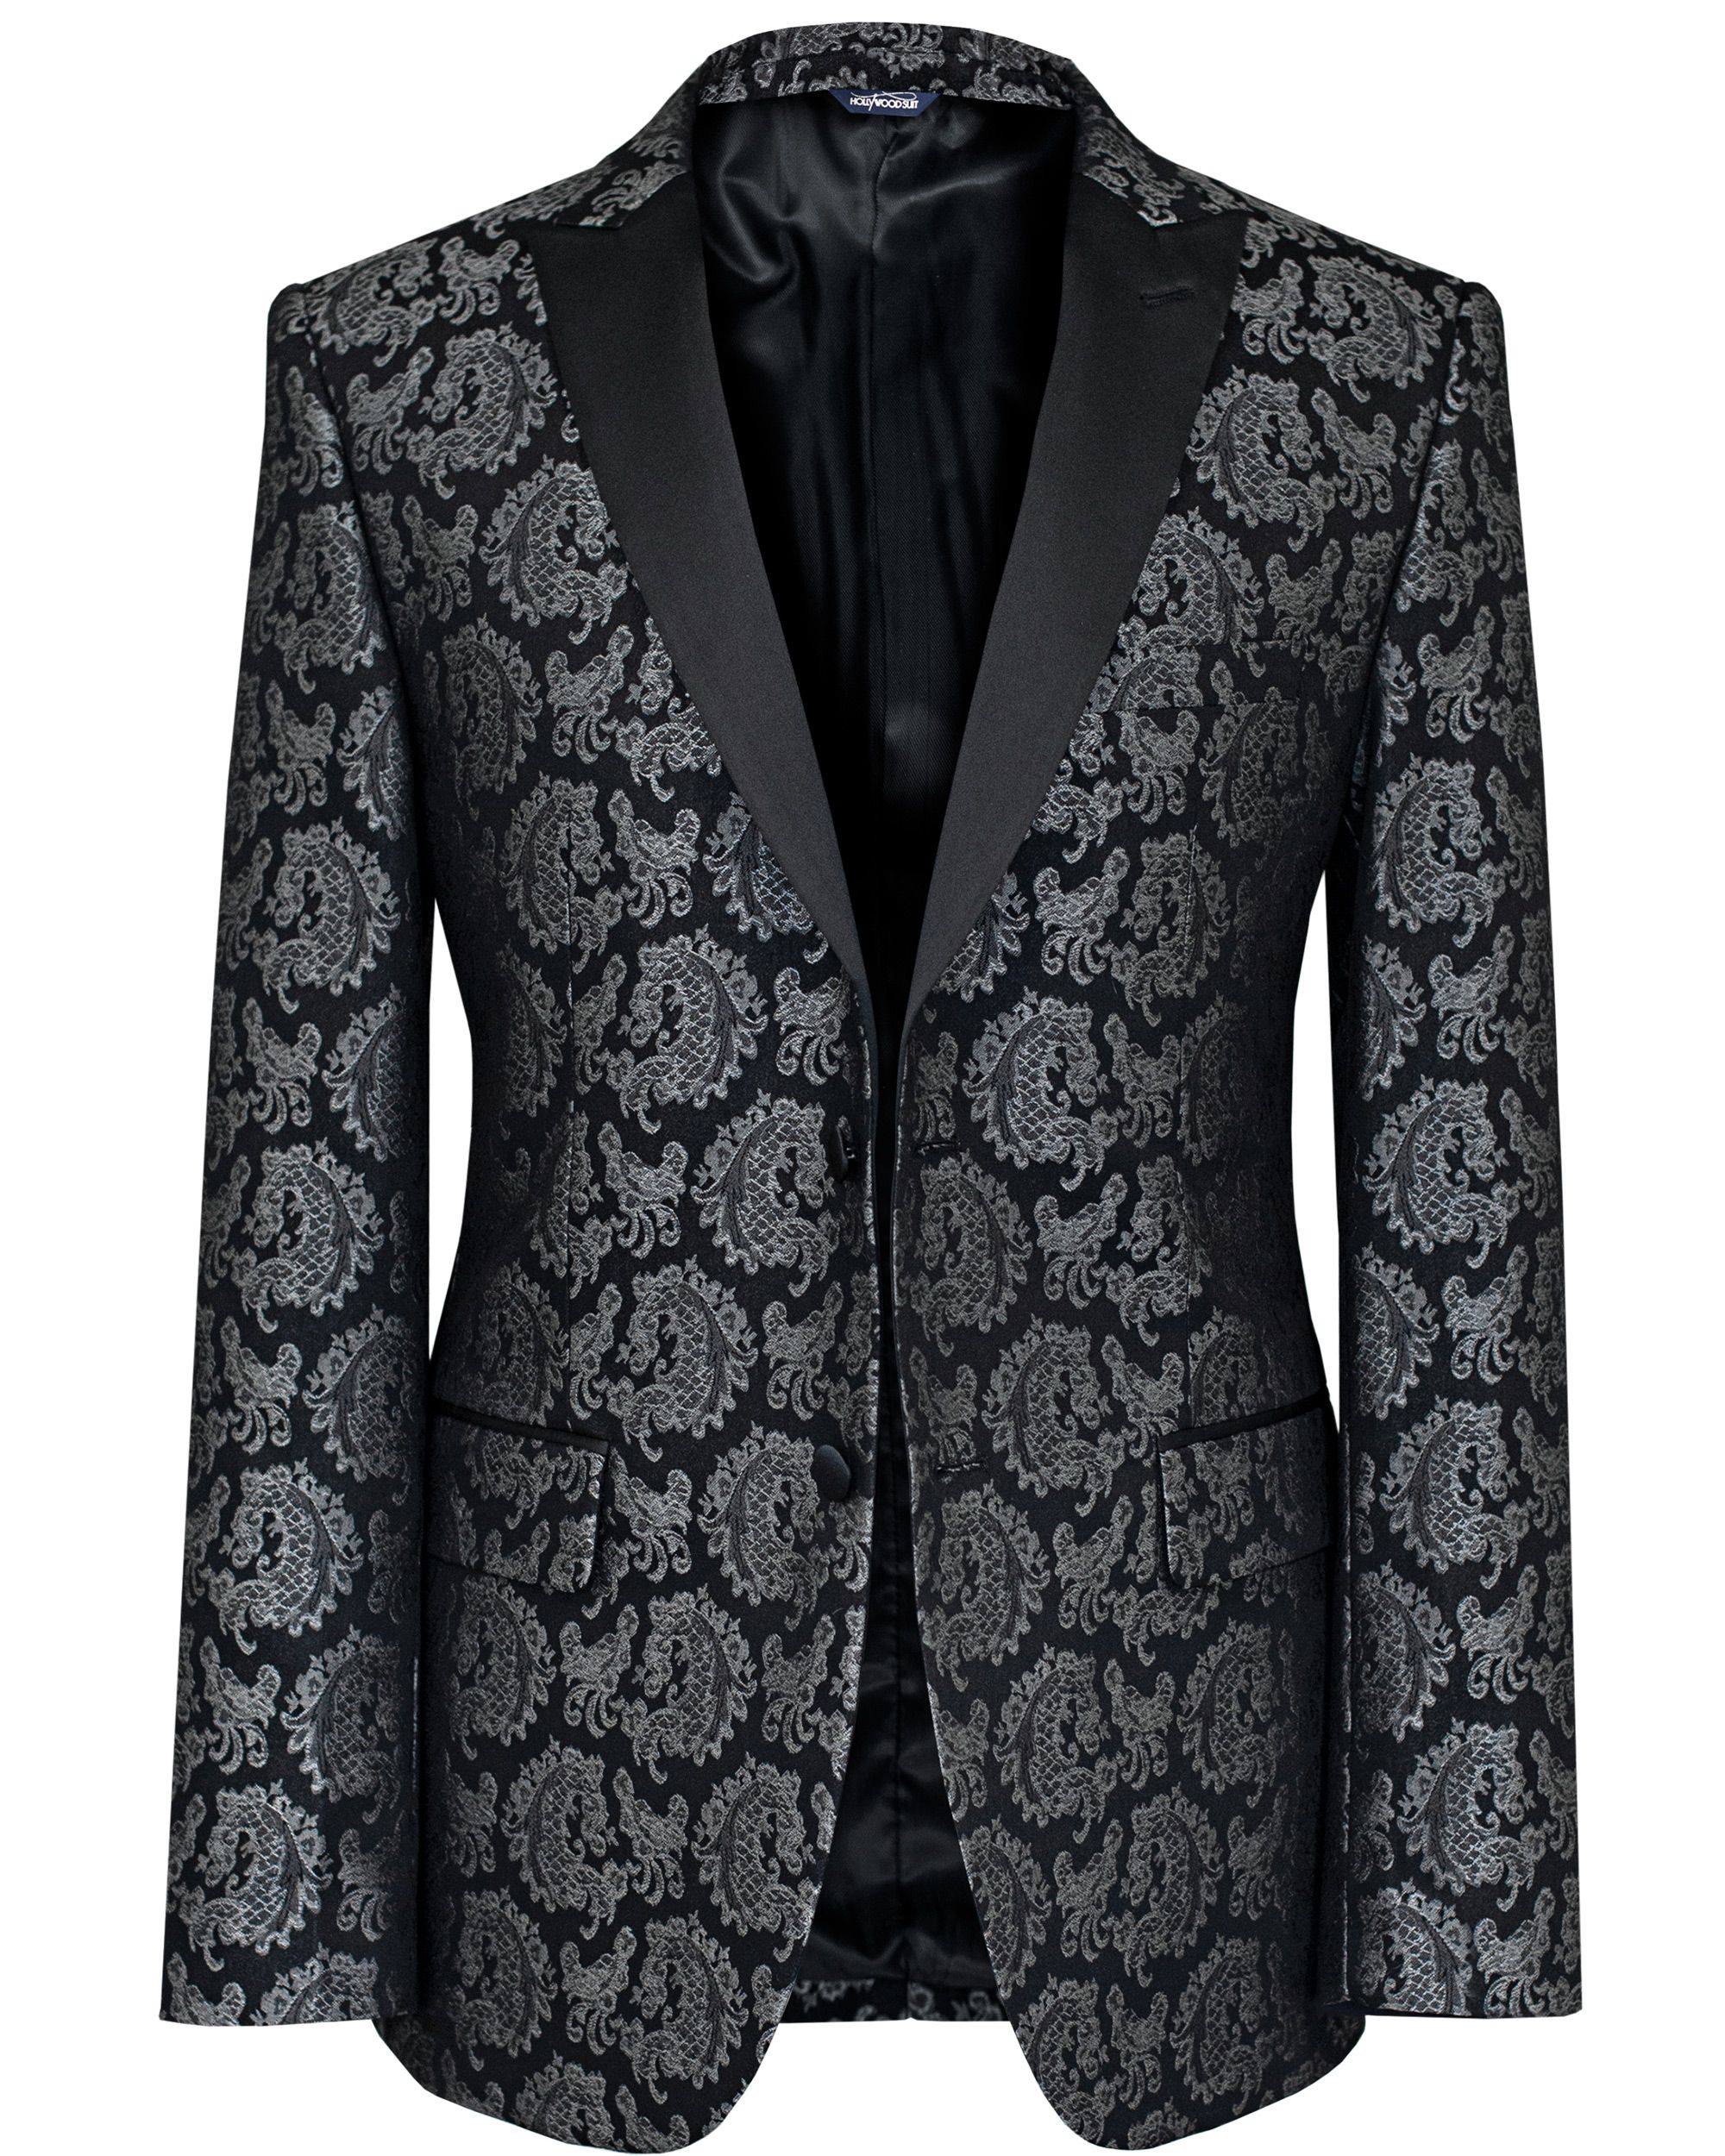 Black Paisley Suit Jacket Clearance Online, Save 68% | jlcatj.gob.mx